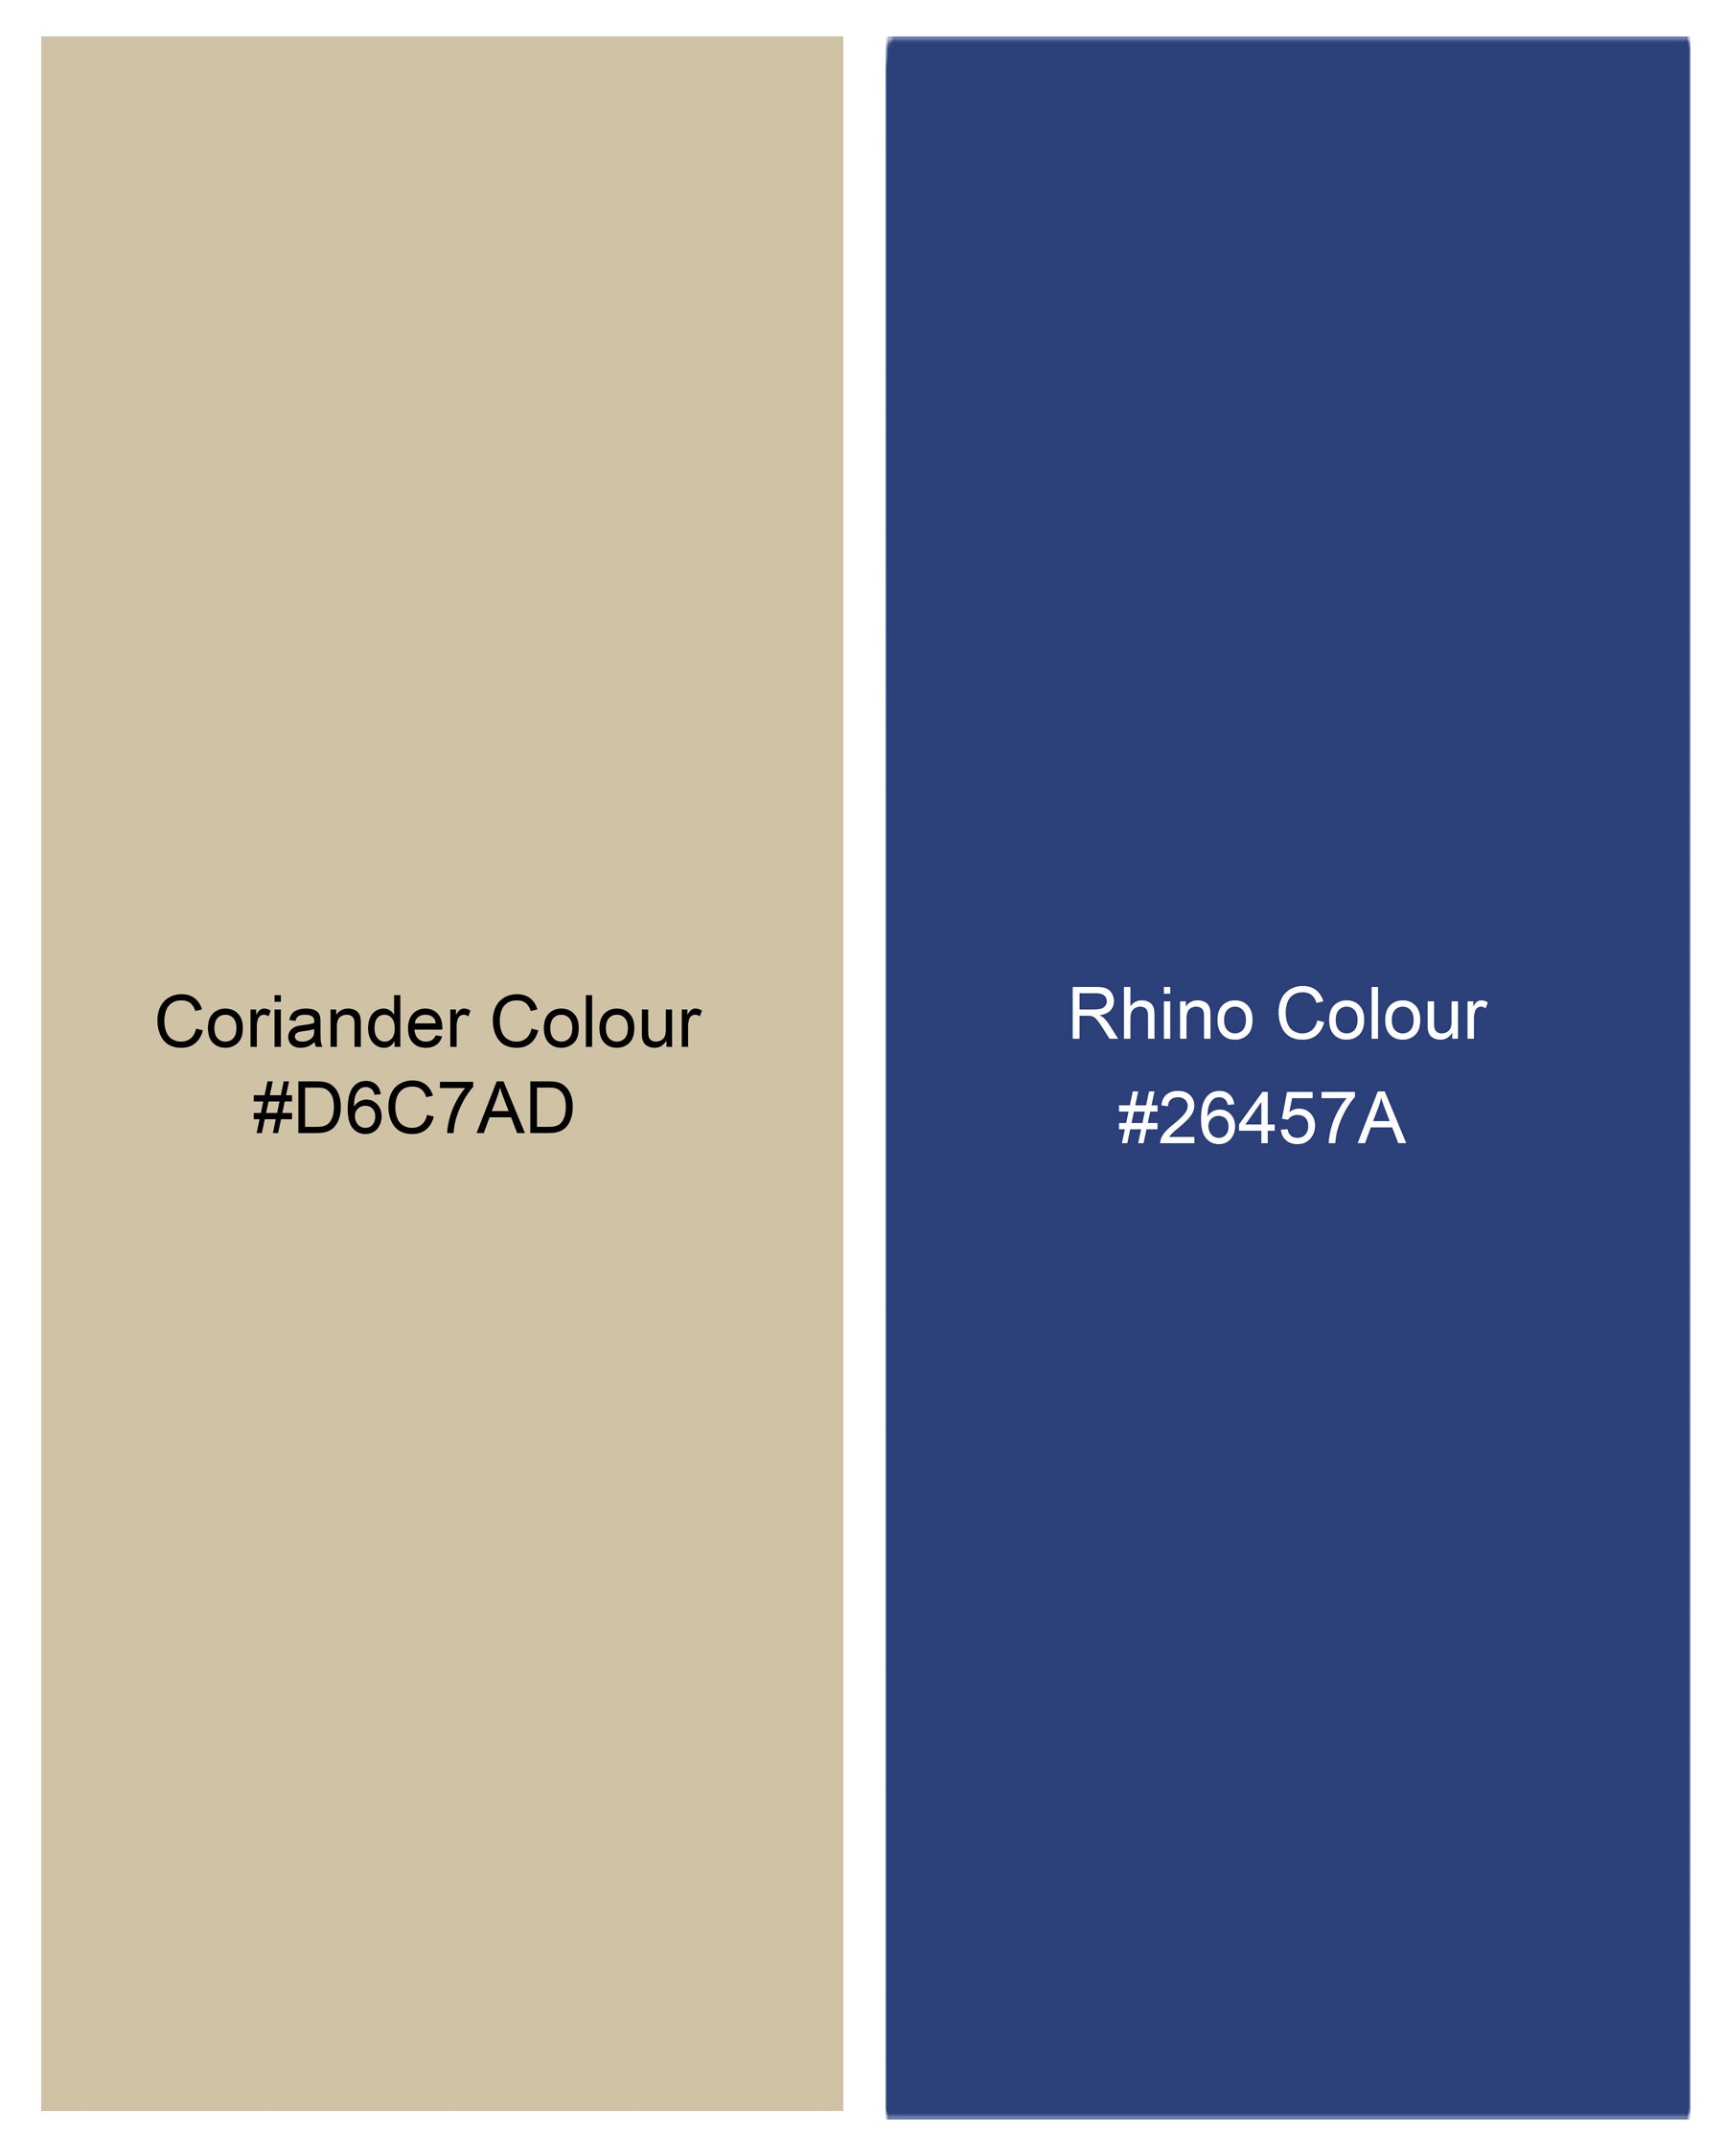 Coriander Light Brown with Rhino Blue Plaid Single Breasted Blazer BL2155-SB-36, BL2155-SB-38, BL2155-SB-40, BL2155-SB-42, BL2155-SB-44, BL2155-SB-46, BL2155-SB-48, BL2155-SB-50, BL2155-SB-52, BL2155-SB-54, BL2155-SB-56, BL2155-SB-58, BL2155-SB-60